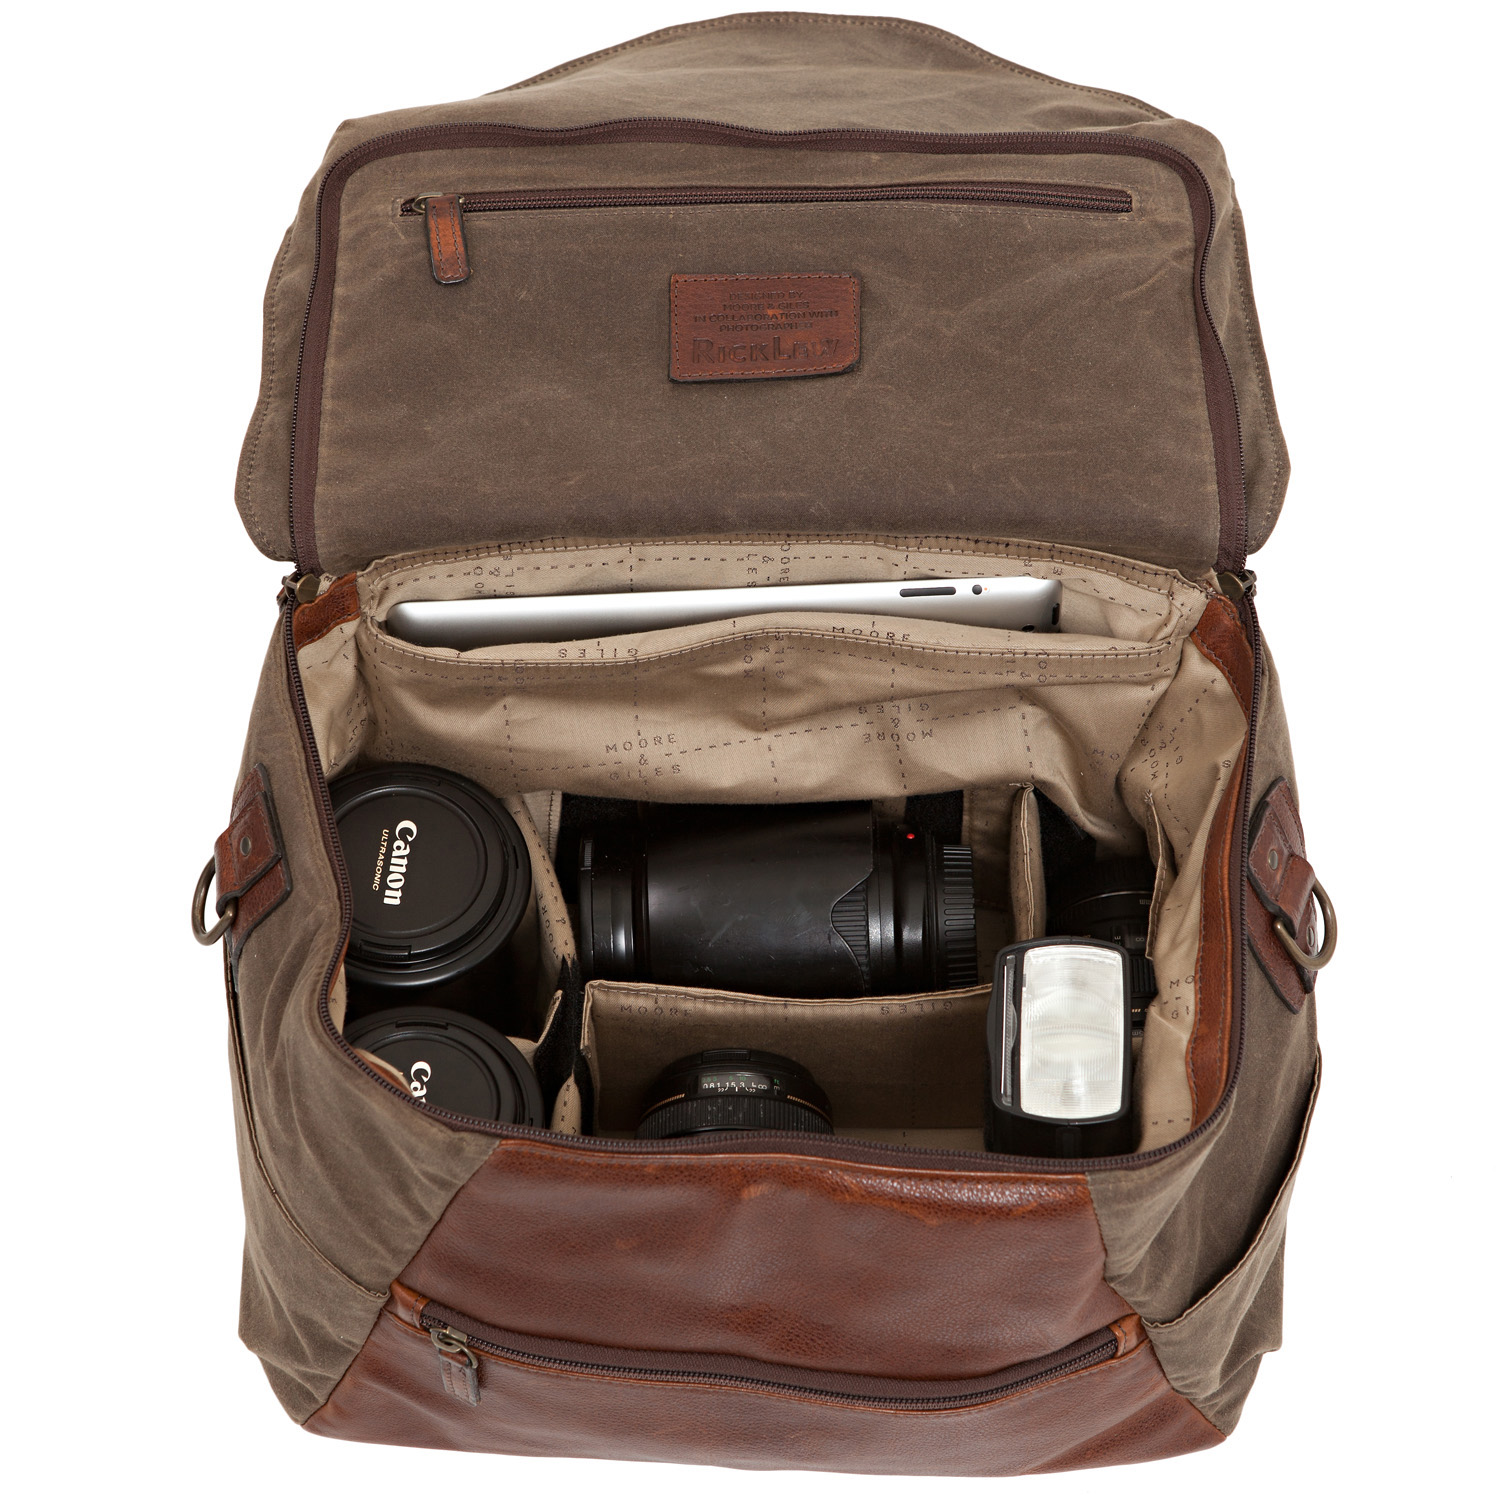 Moore & Giles Lew Leather Camera Bag in Waxwear Rangertan